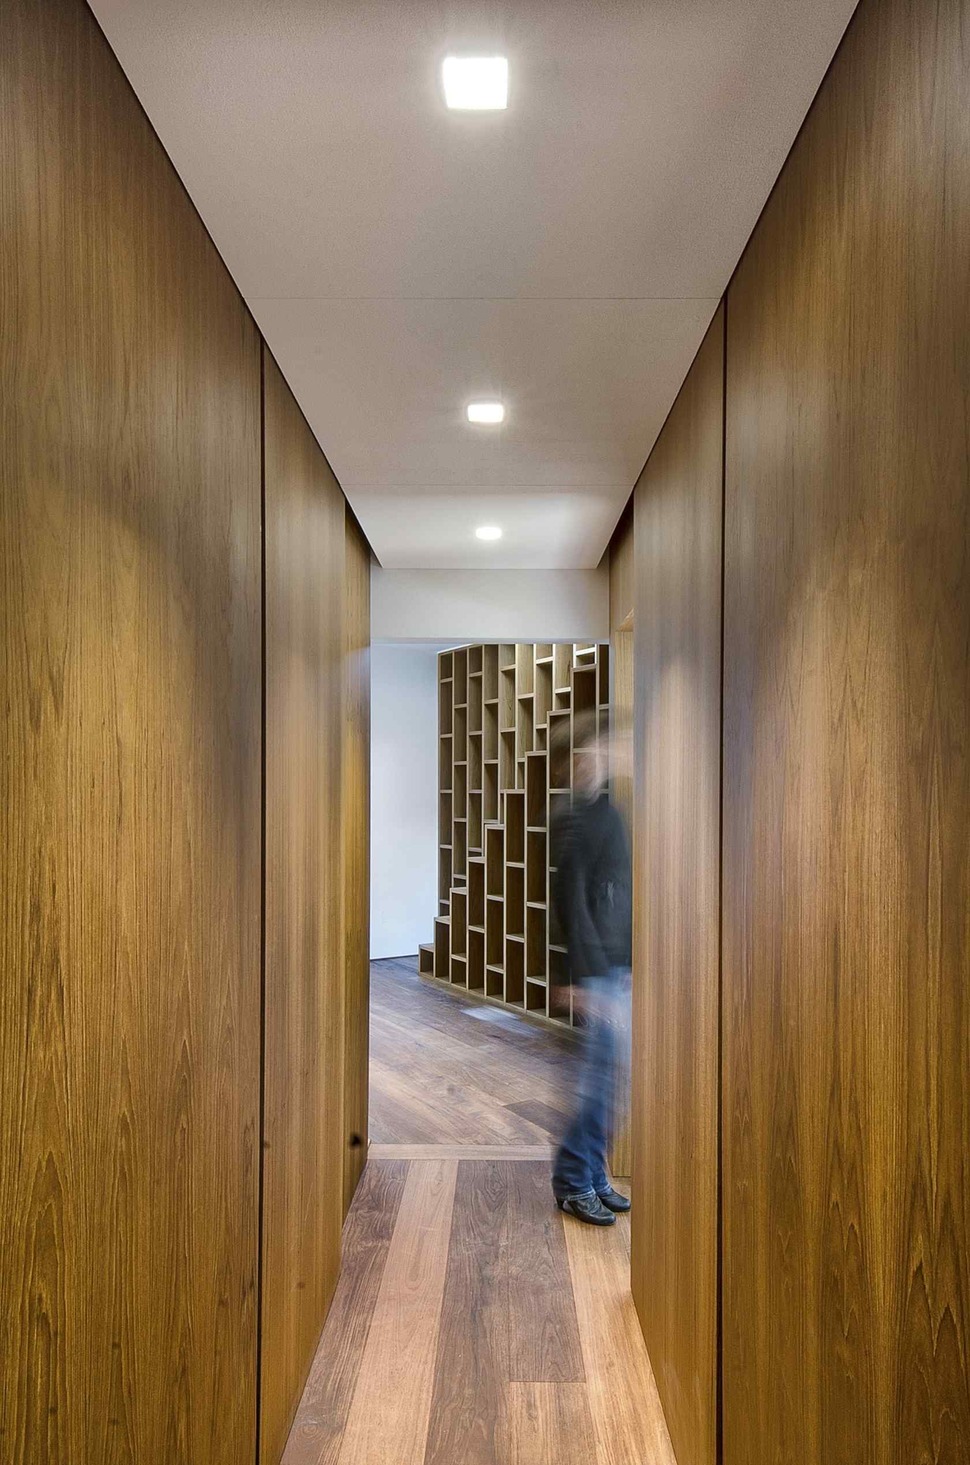 minimal-italian-home-blends-unique-stone-wood-finishes-16-hallway.jpg